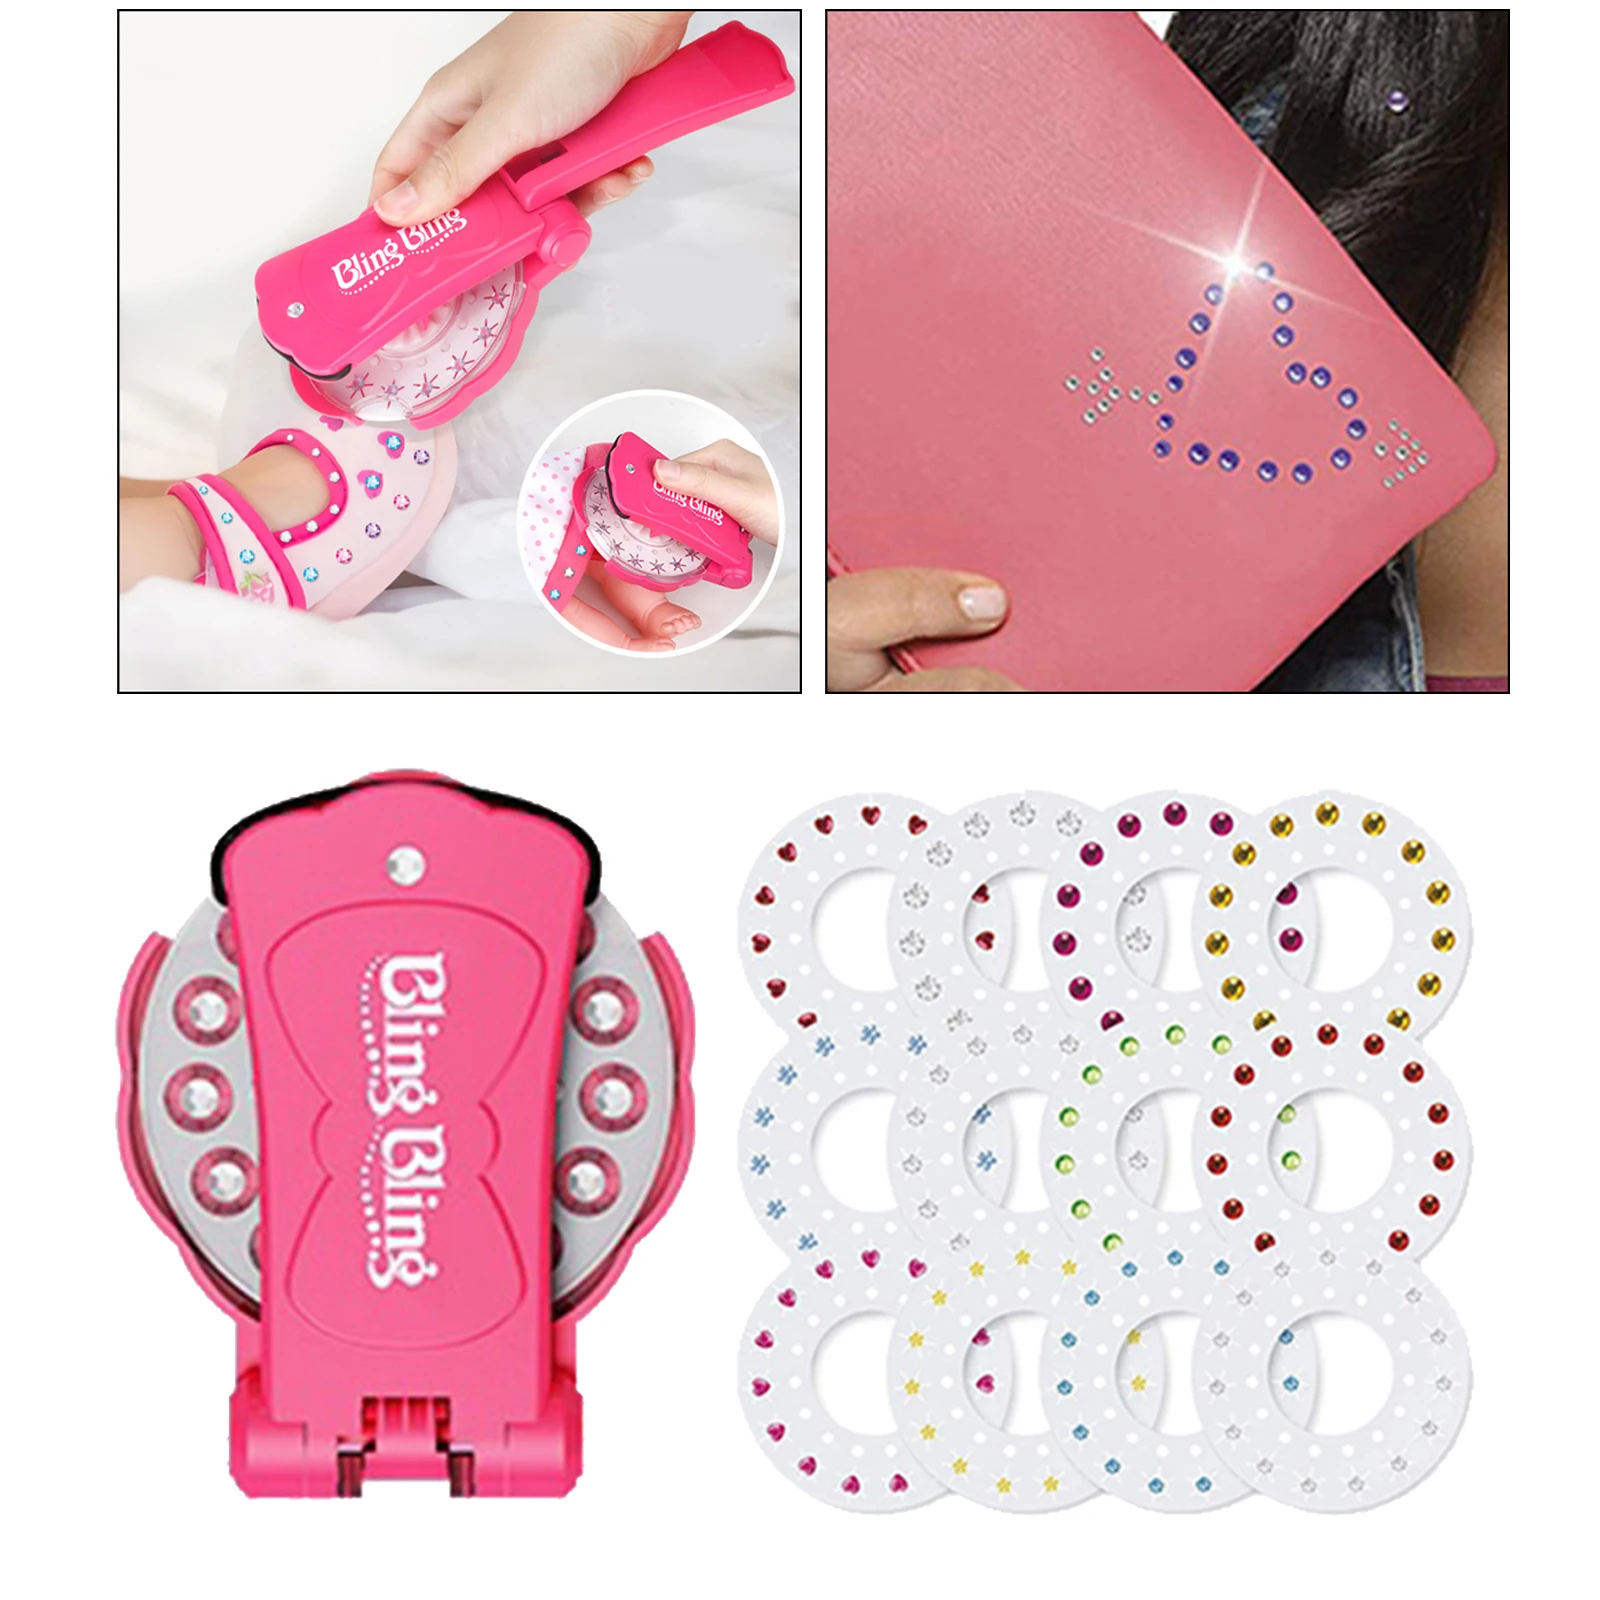 Diamond Hair Sparkle Stapler Tools Set for Shoes Shirt Ornaments Girls Gift with 180pcs Diamond